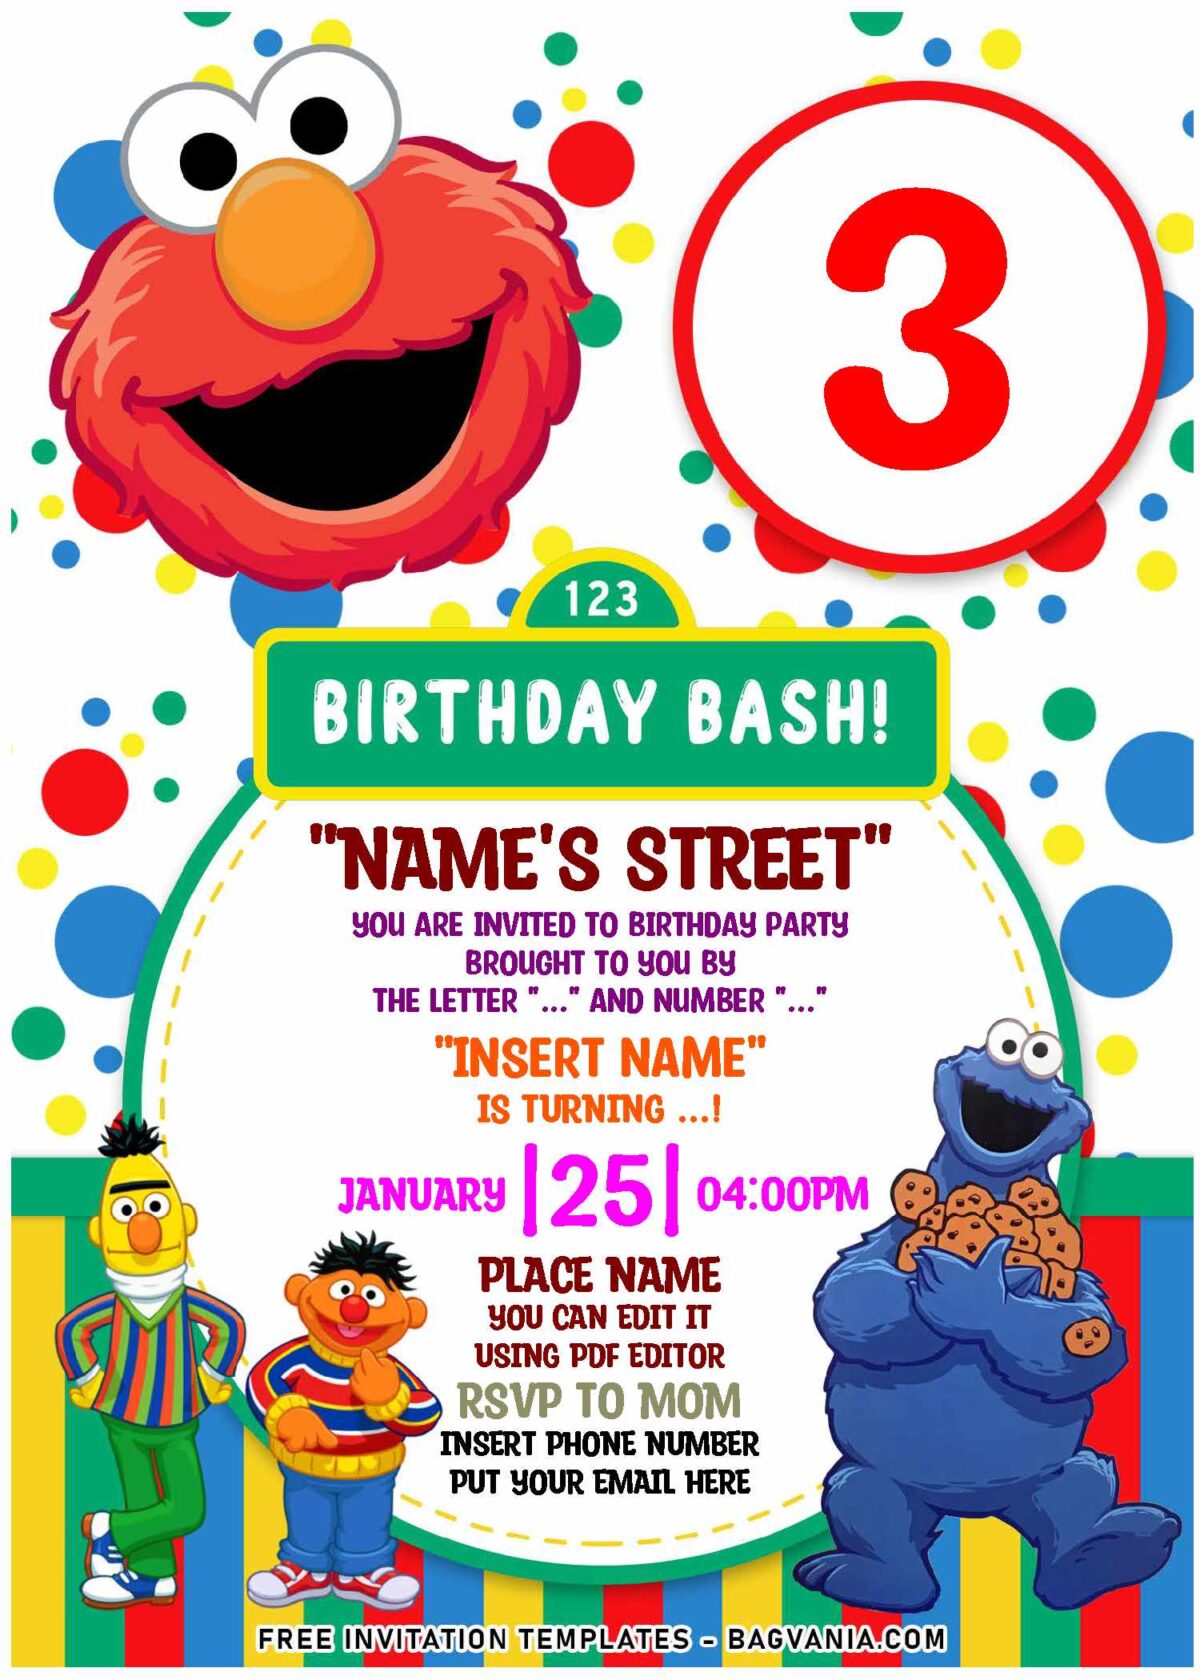 (Free Editable PDF) Super Cute Sesame Street Birthday Invitation Templates with colorful text